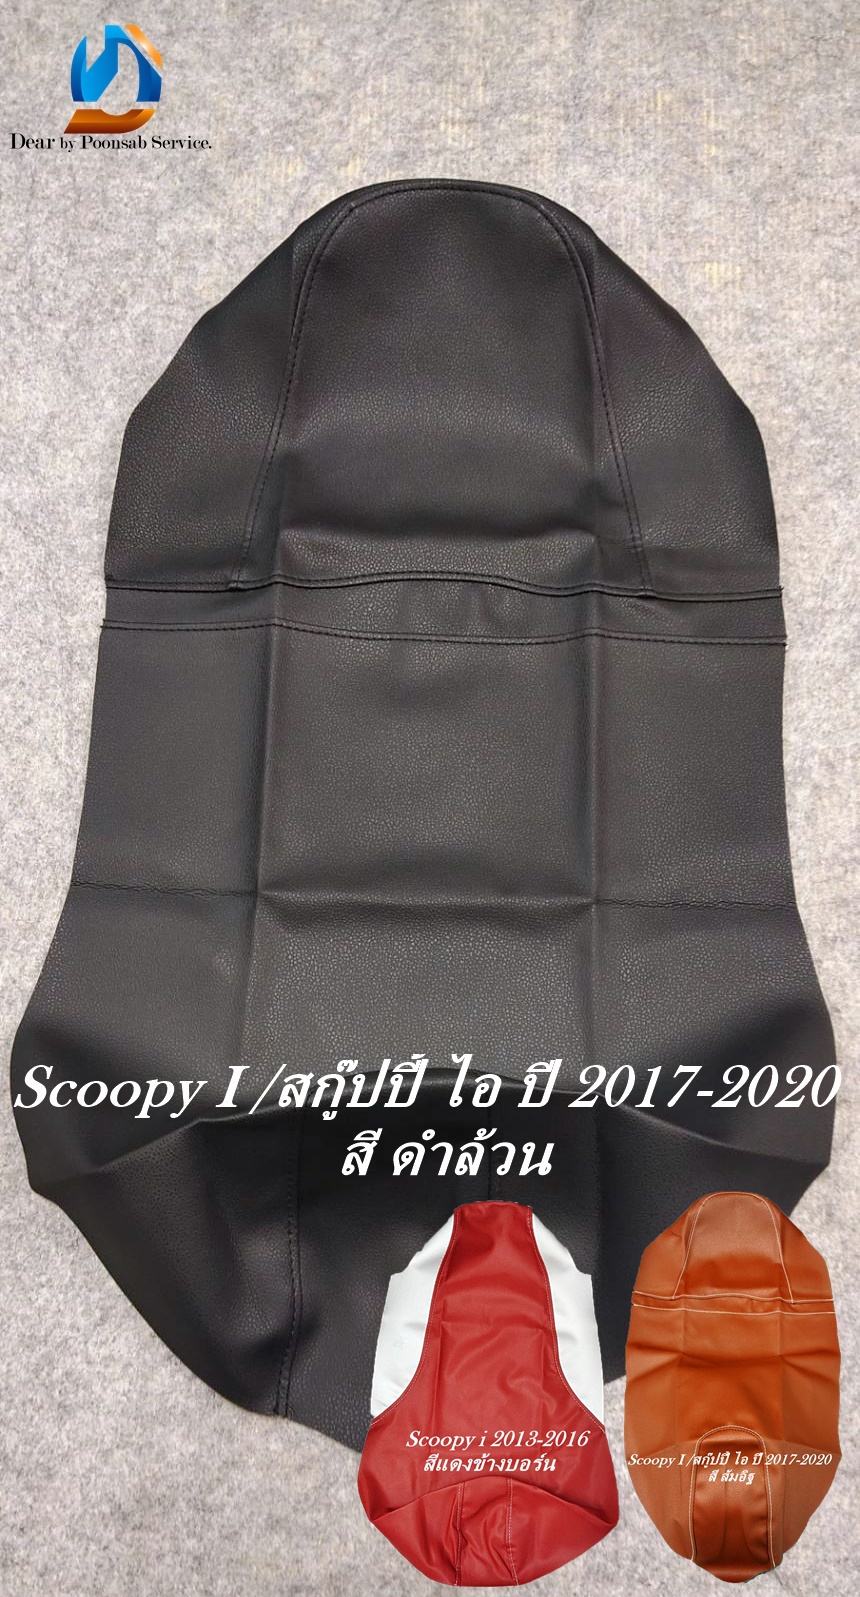 Scoopy i 2009-2020/ สกุ๊ปบี้ ไอ ปี 2009-2020 ผ้าหุ้มเบาะรถมอเตอร์ไซด์